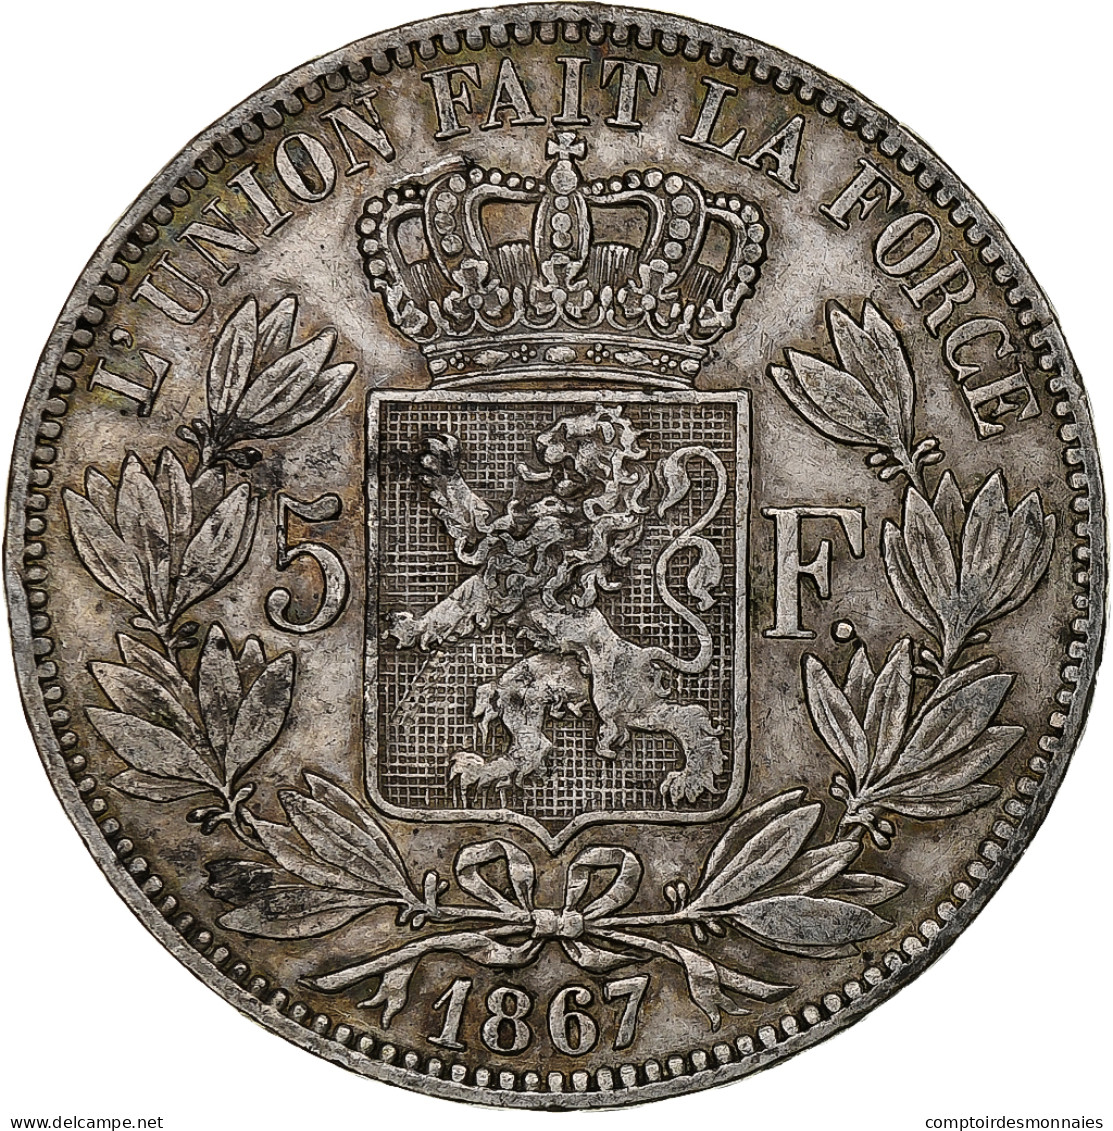 Belgique, Leopold II, 5 Francs, 5 Frank, 1867, Avec Point, Argent, TB, KM:24 - 5 Francs